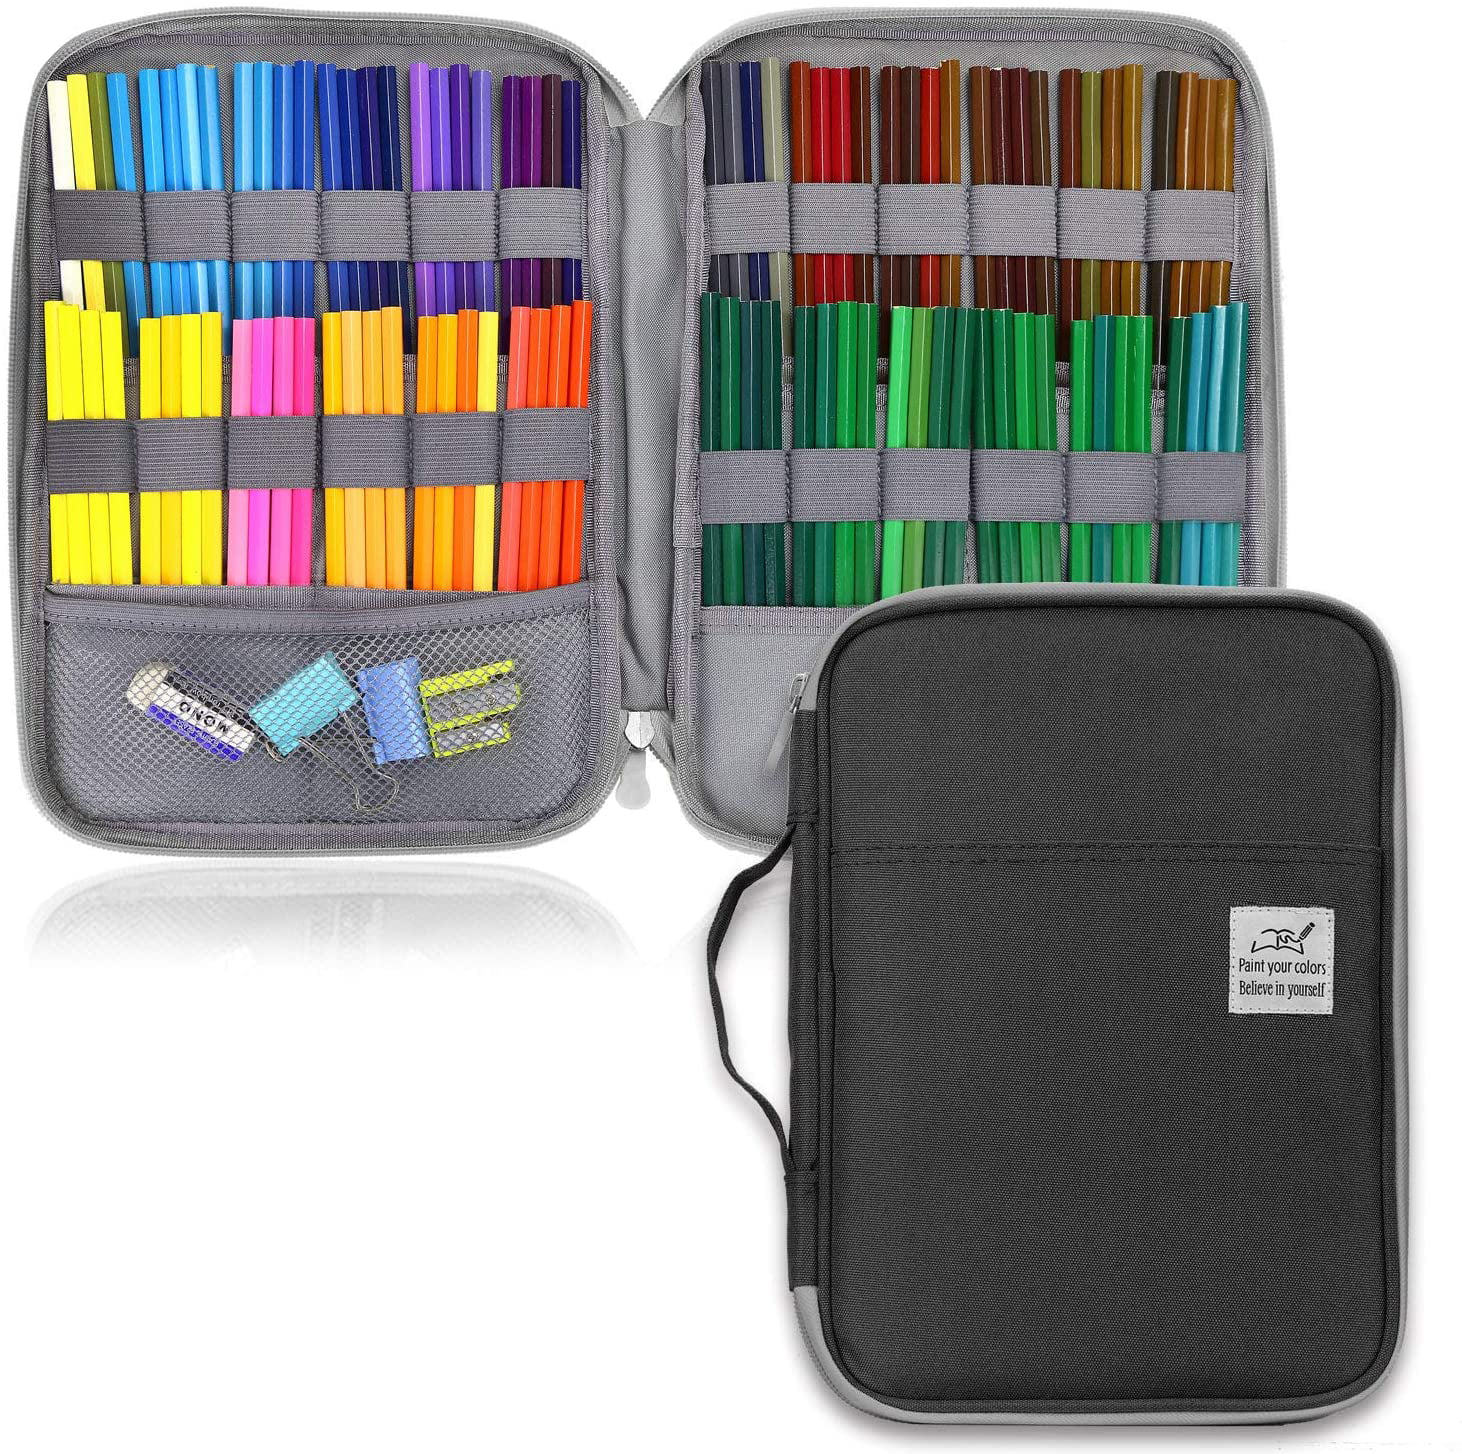 Large Capacity Pencil Organizer Color Gel Pens Holder Bag with Zipper Closure for Watercolor Pens Prismacolor Premier Crayola Pencils 240 Colored Pencil Case Pencils Not Included 